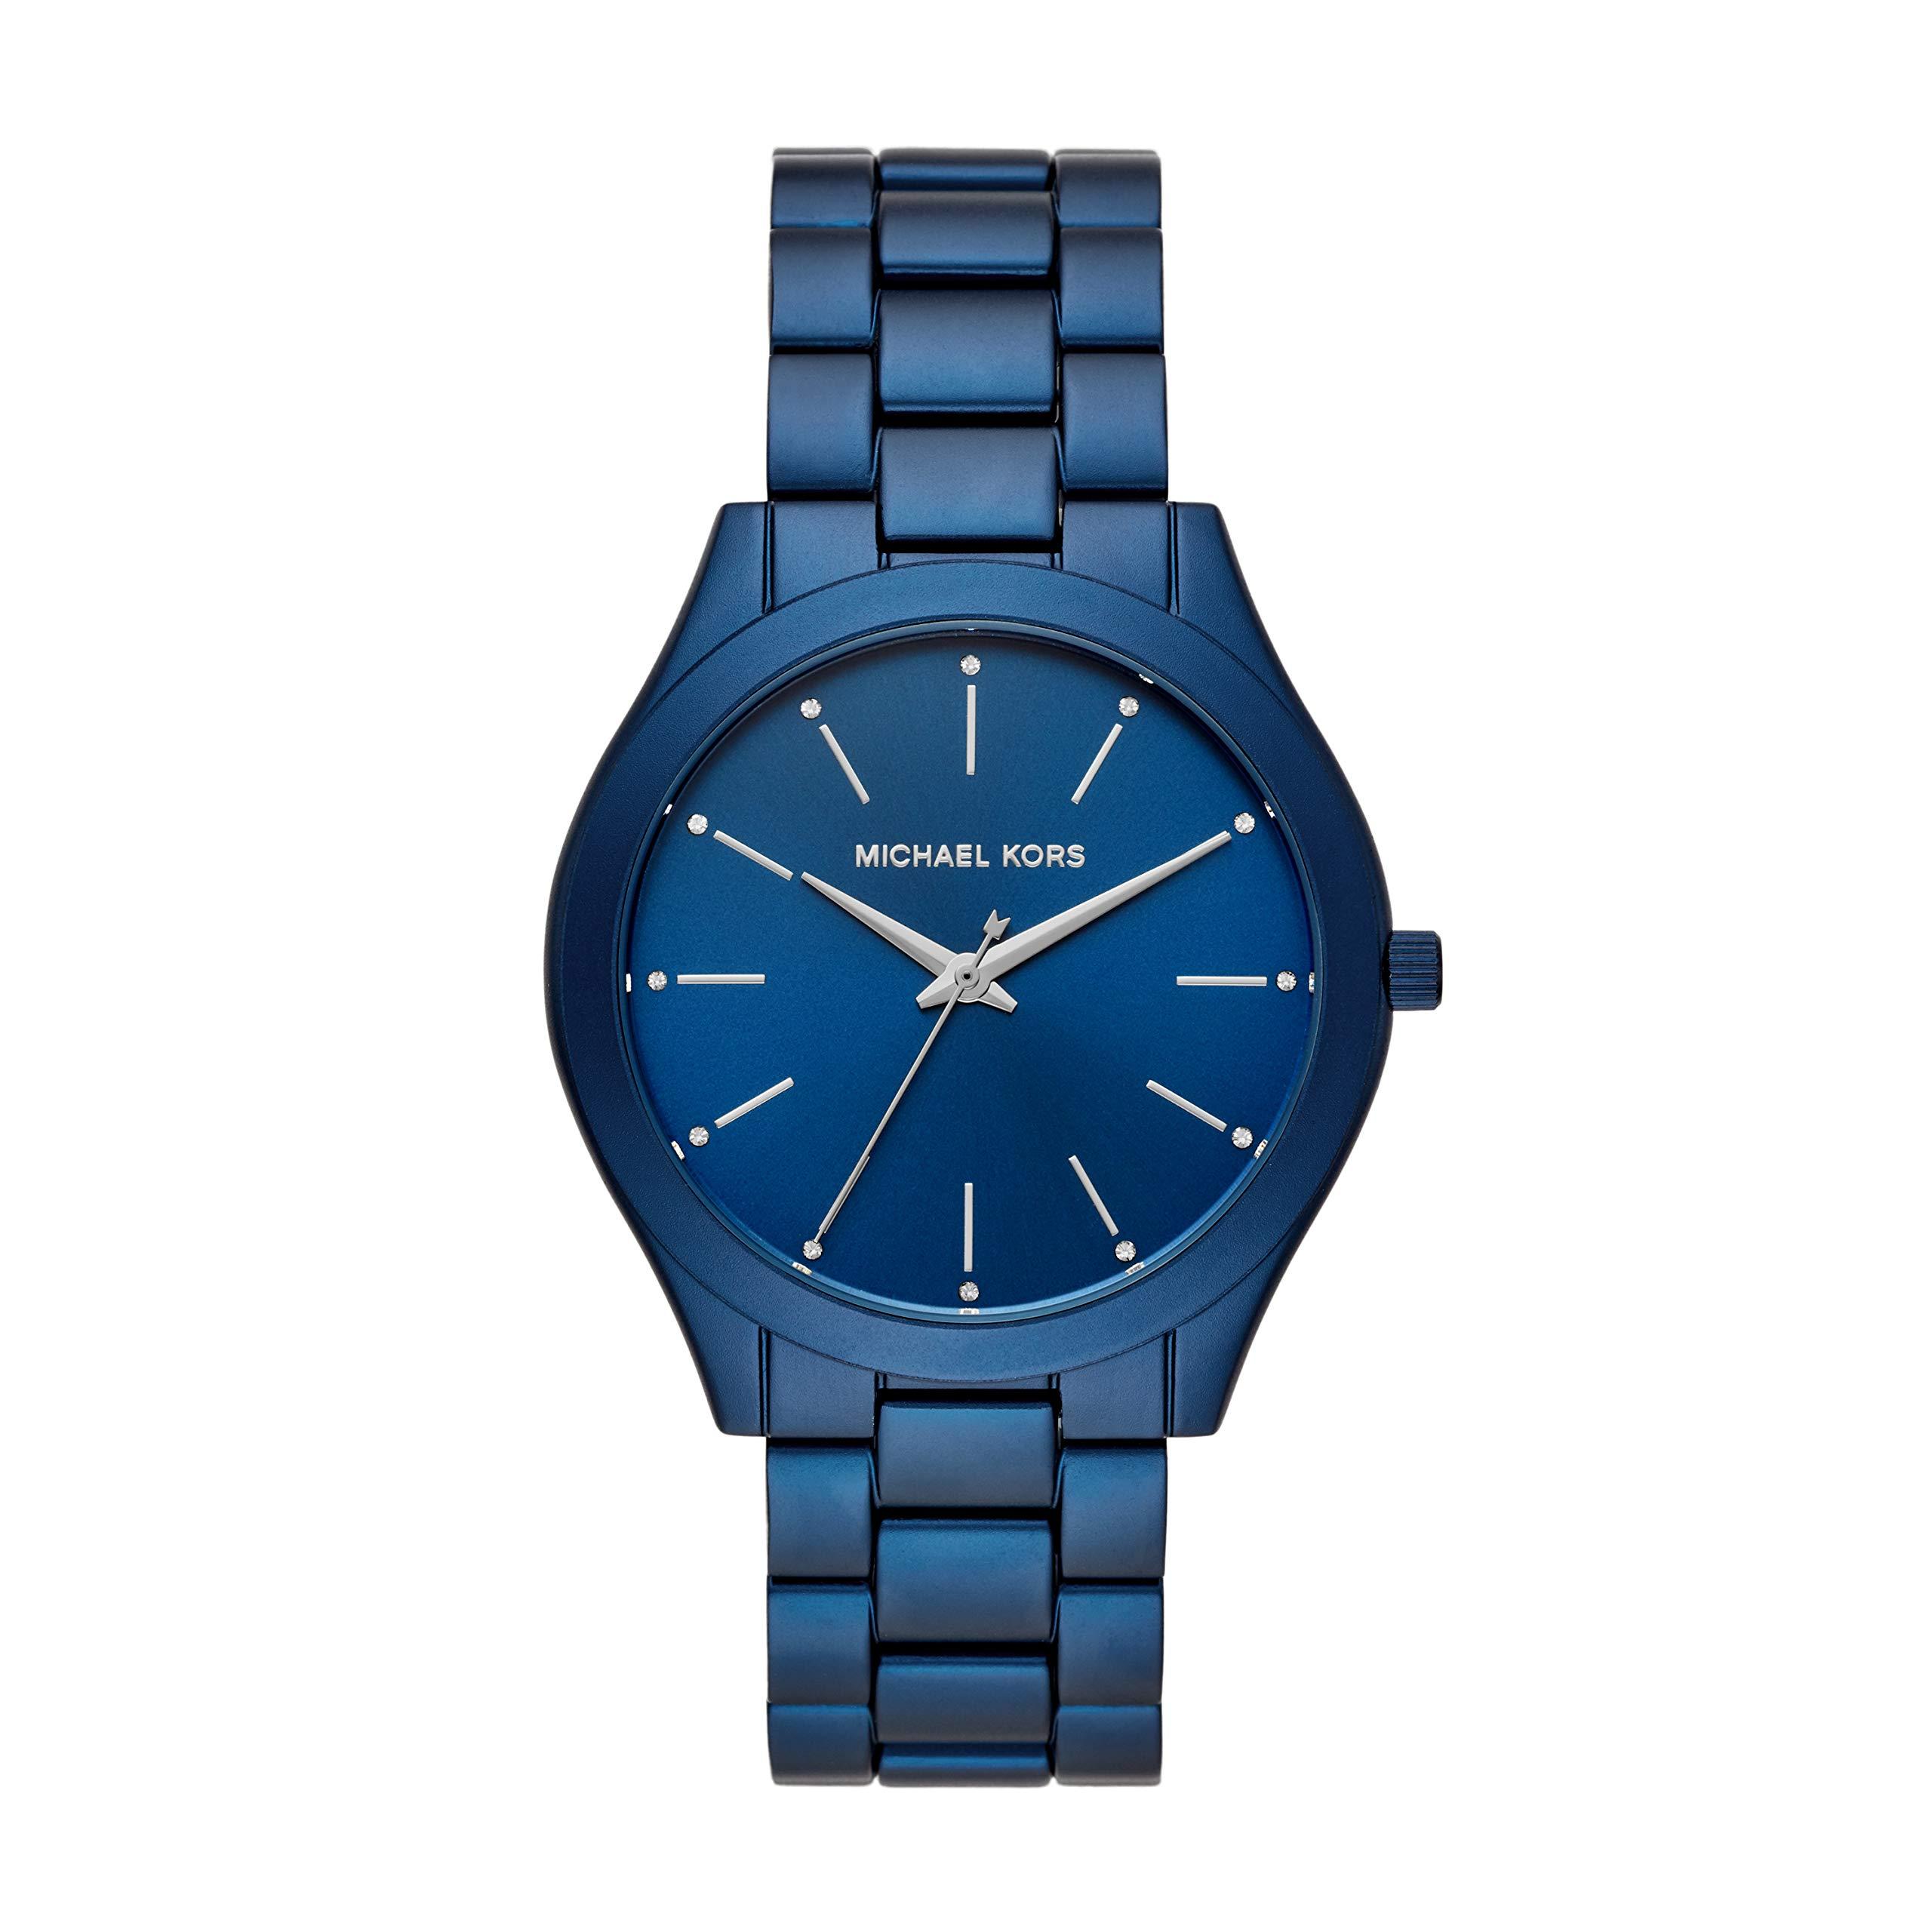 Michael Kors Slim Runway Quartz Watch With Metal Strap in Blue | Lyst